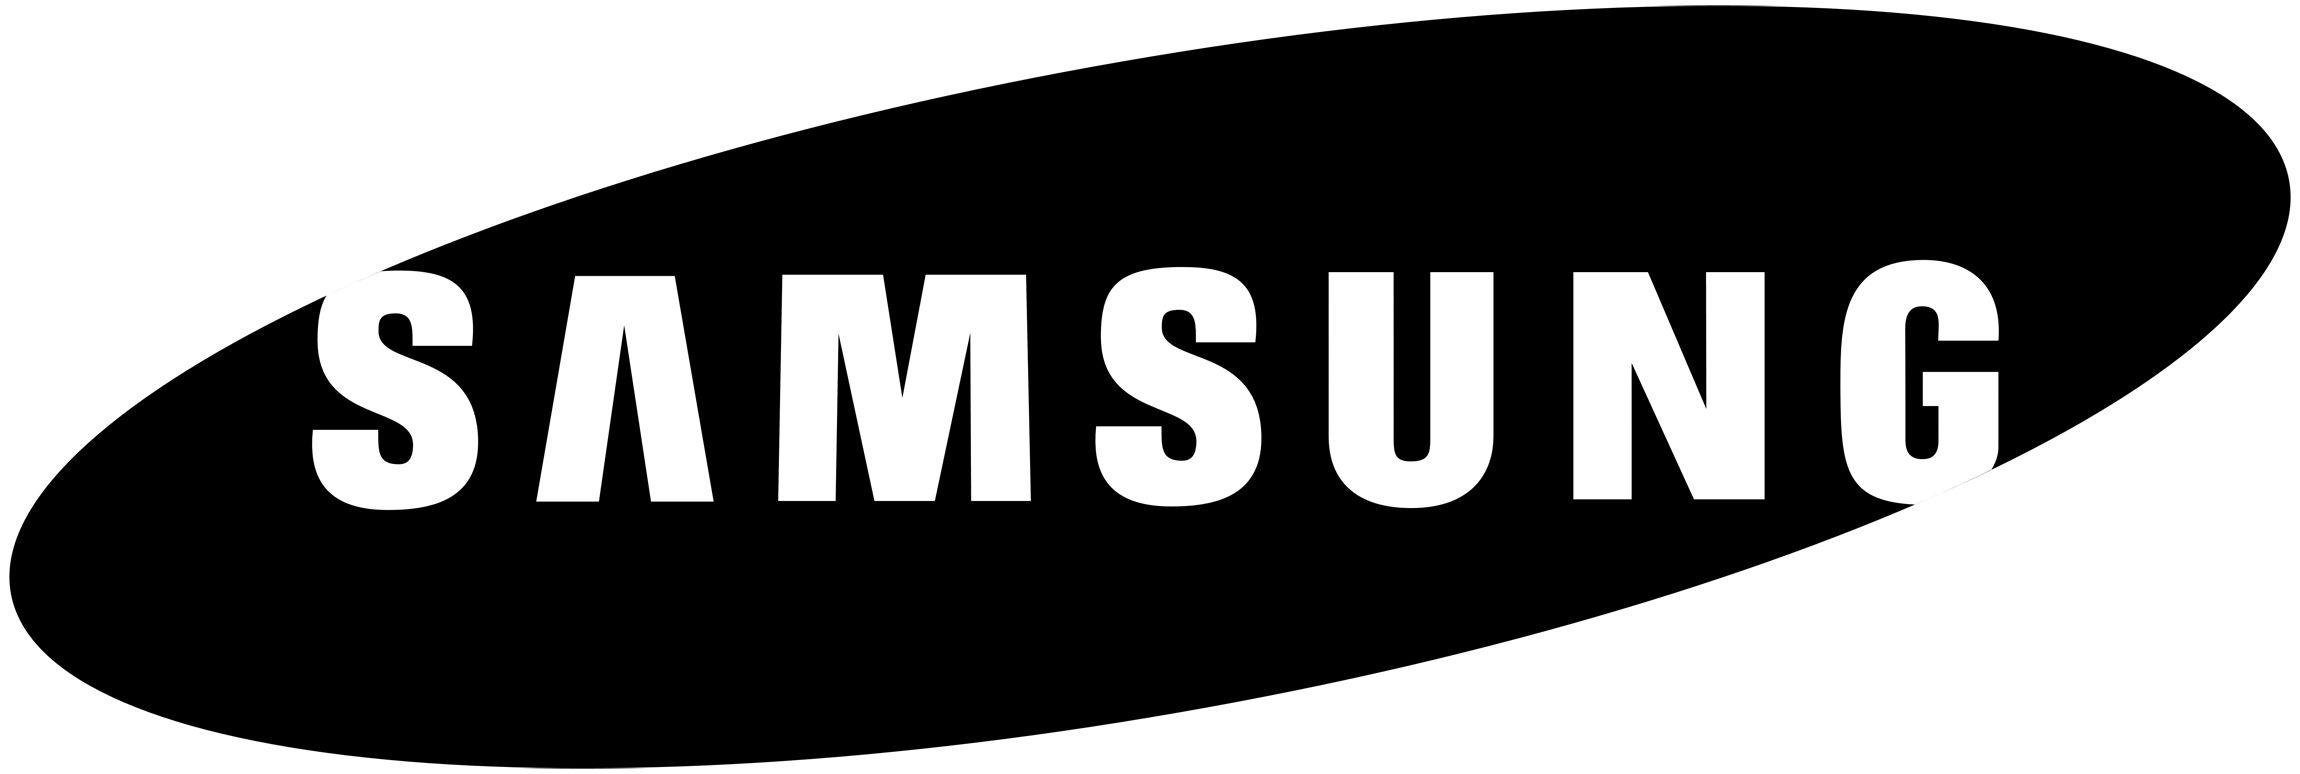 Introduction Logo - Samsung Logo, Samsung Symbol, Meaning, History and Evolution